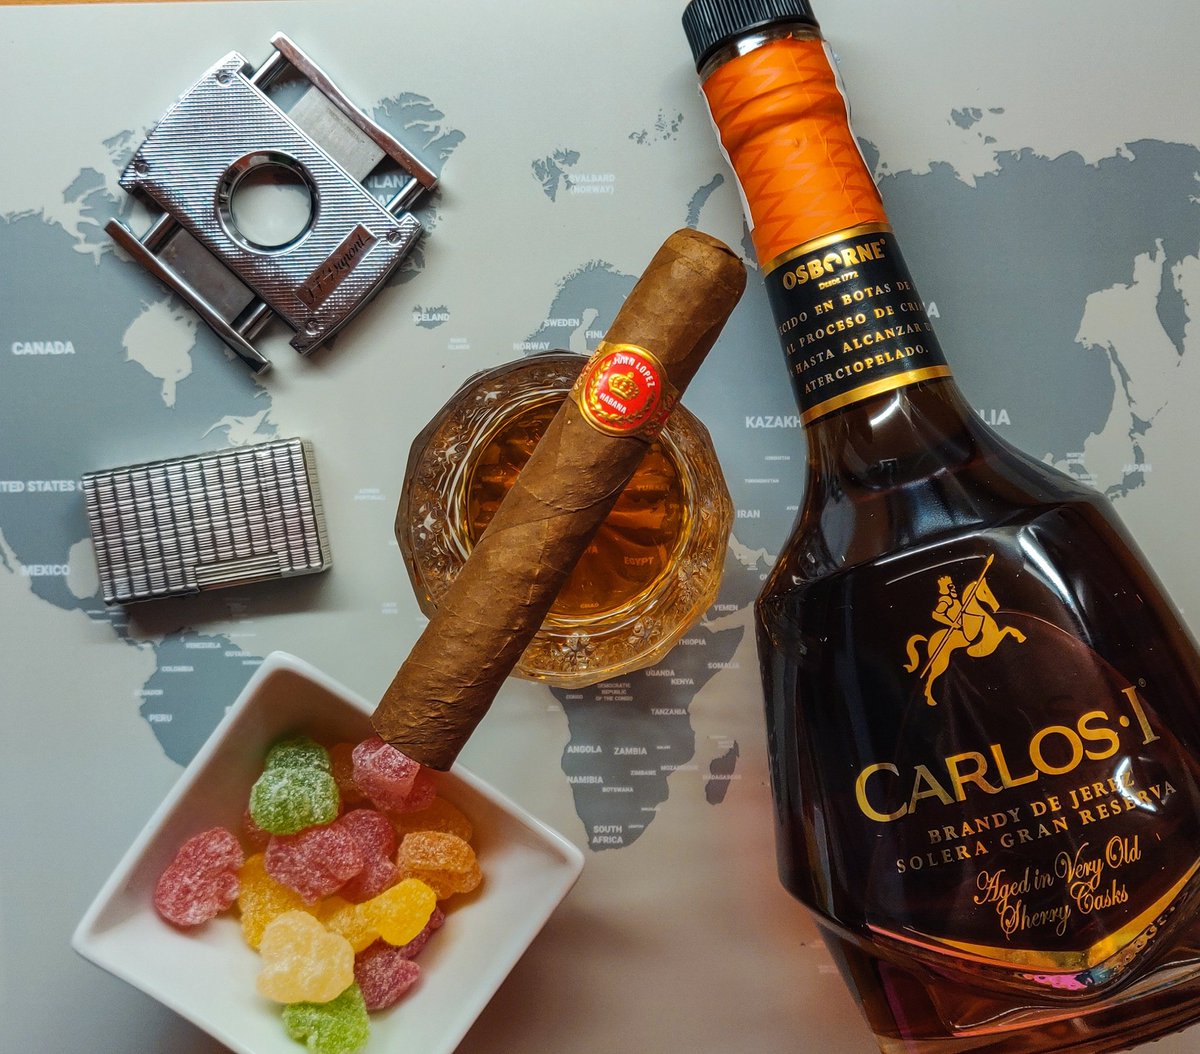 It's my time, JUAN LÓPEZ No.2 y brandy de Jerez Carlos I.

#clubmomentohumo #juanlopez #juanlopezno2 #habanos #pasionhabanos #brandycarlos1 #carlos1 #brandydejerez #cigars #cigarlife